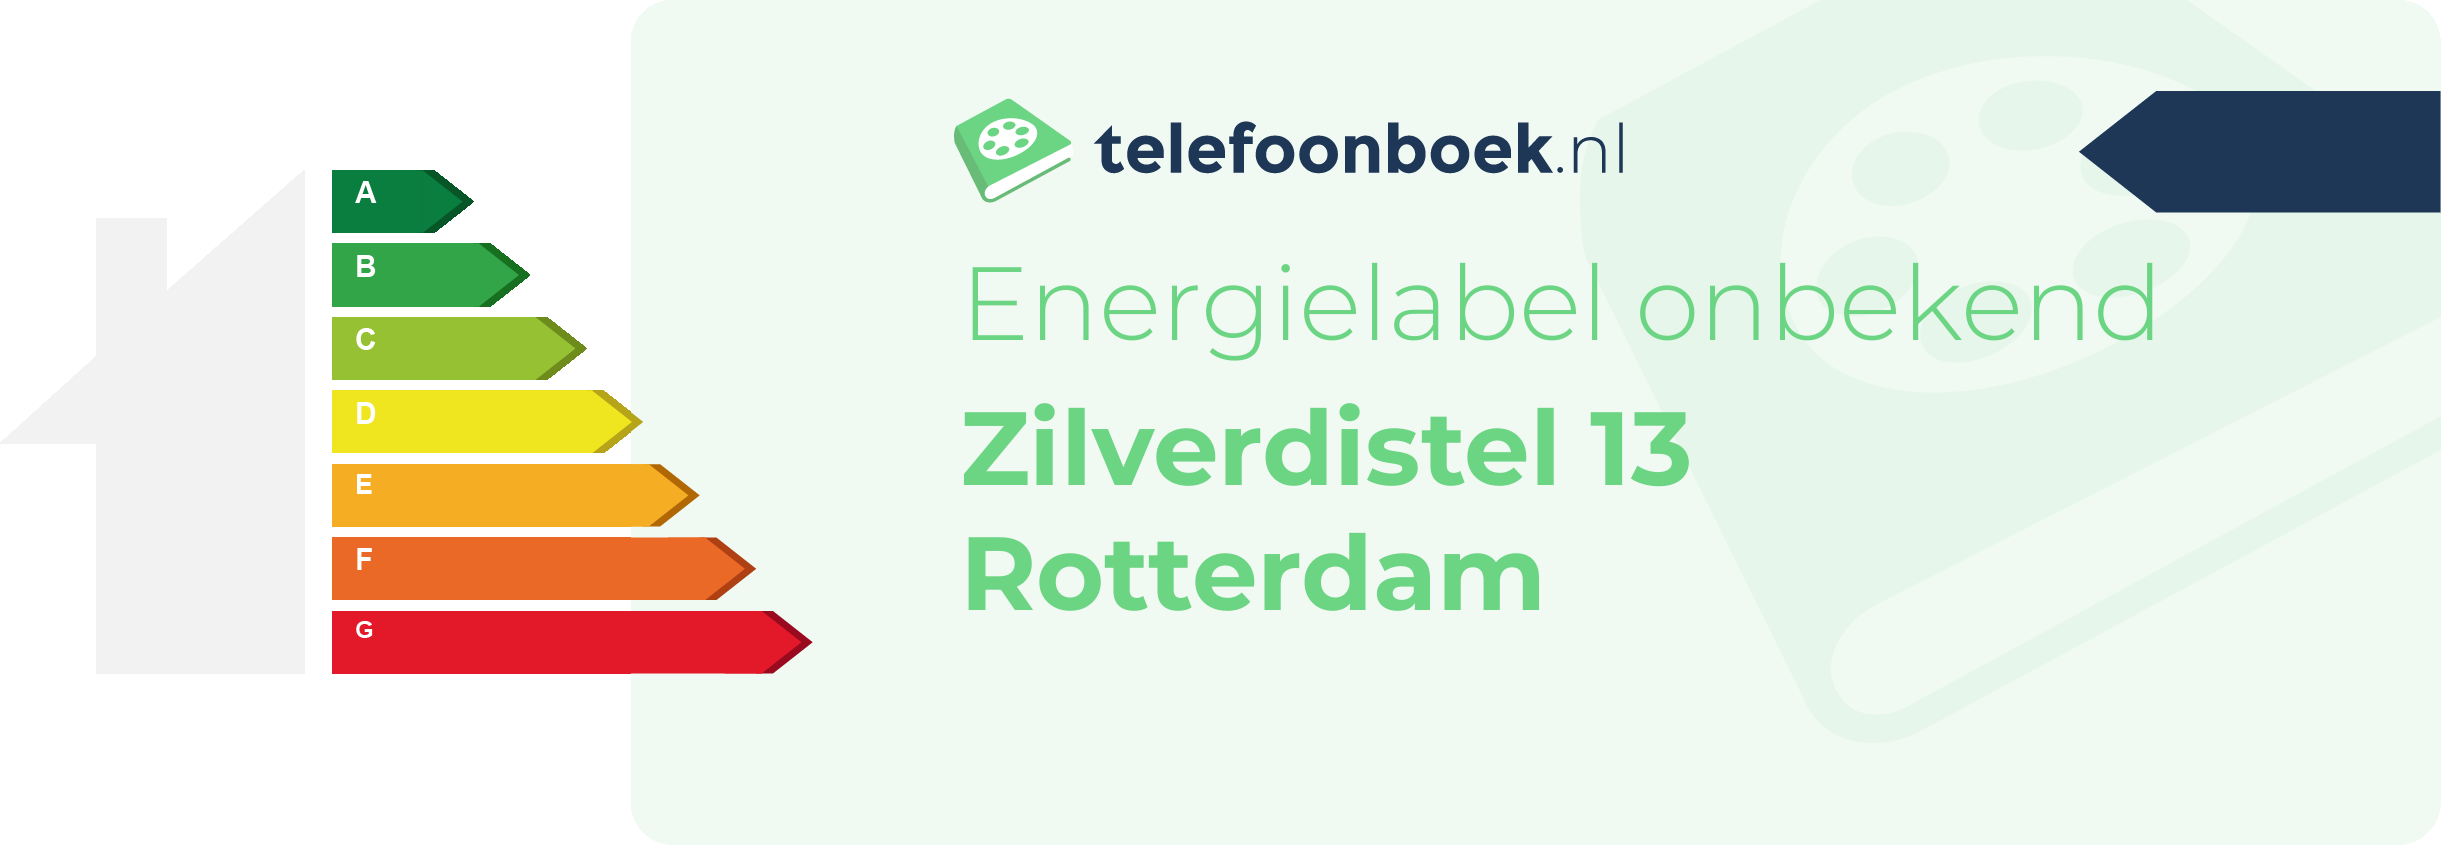 Energielabel Zilverdistel 13 Rotterdam